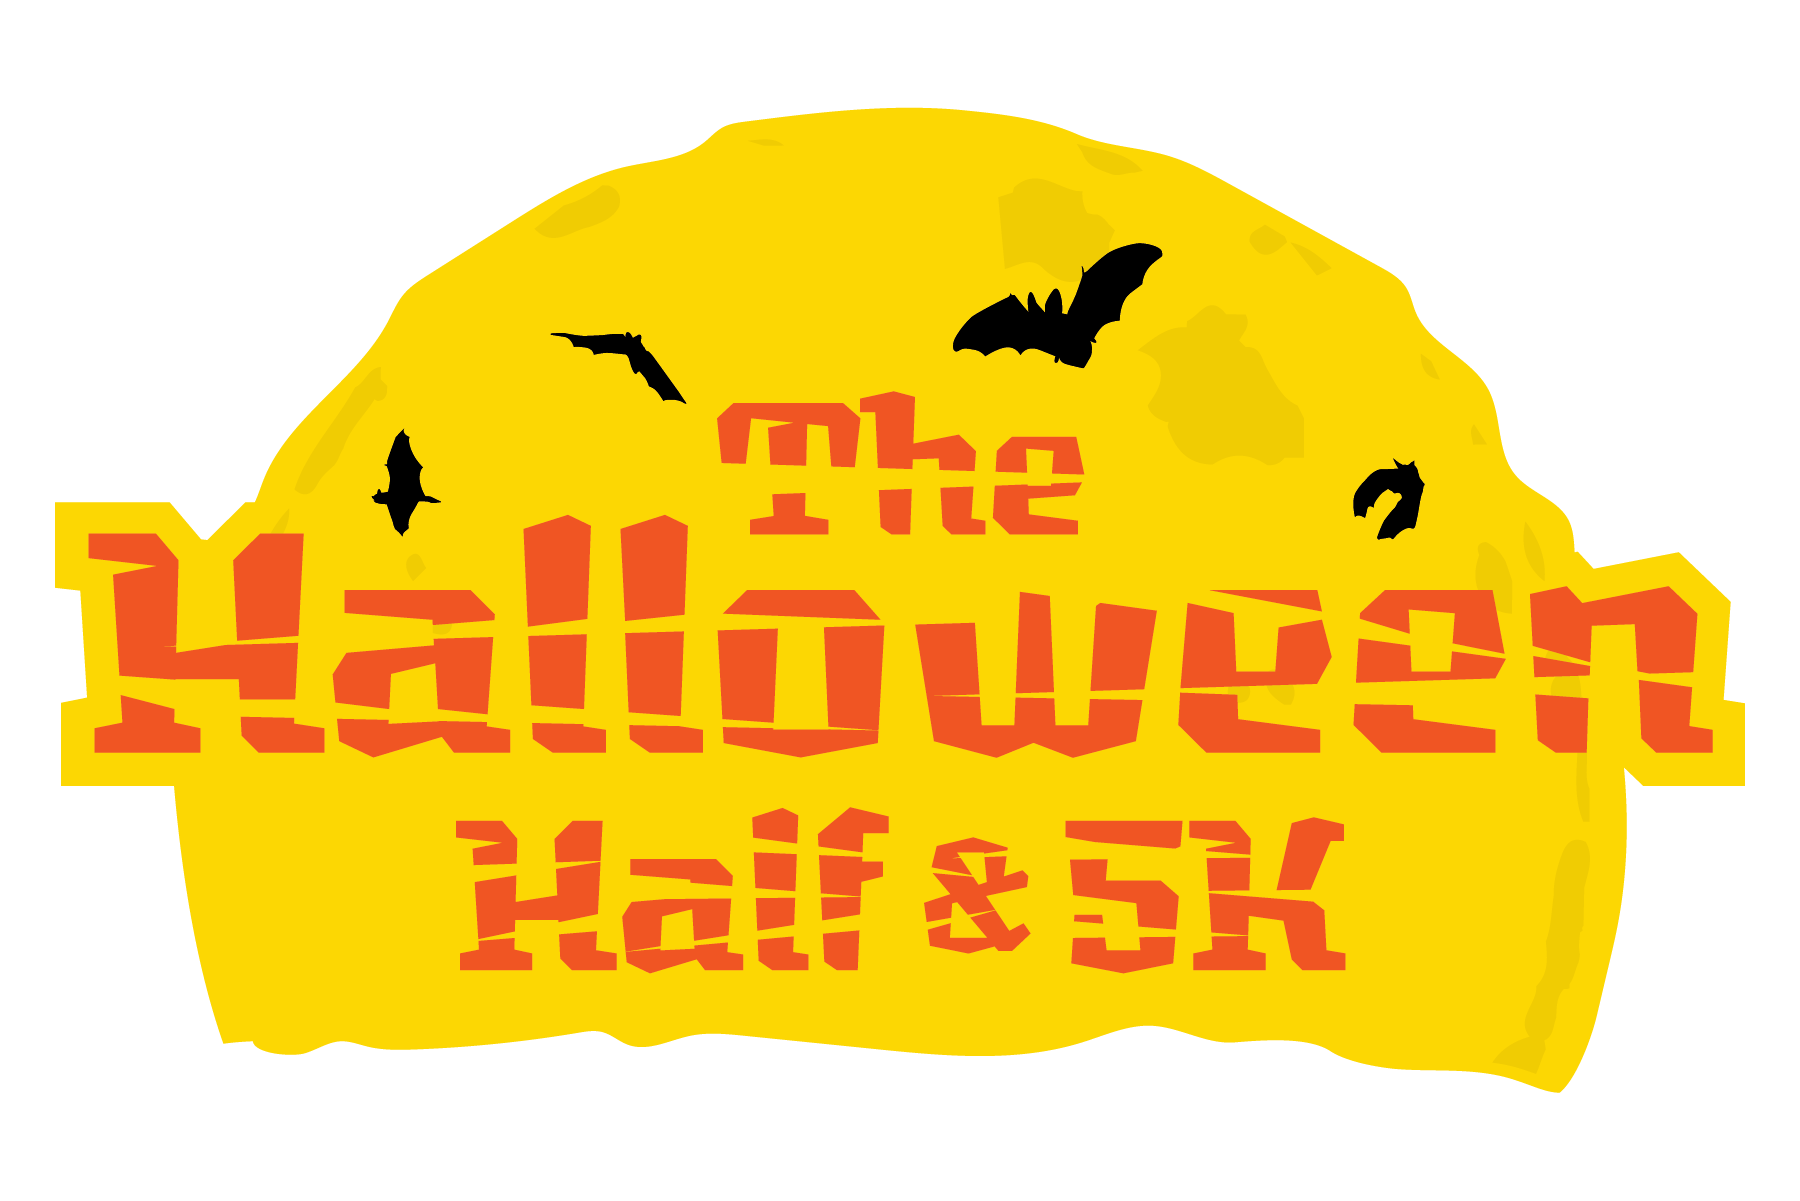 Halloween Half Ogden logo on RaceRaves